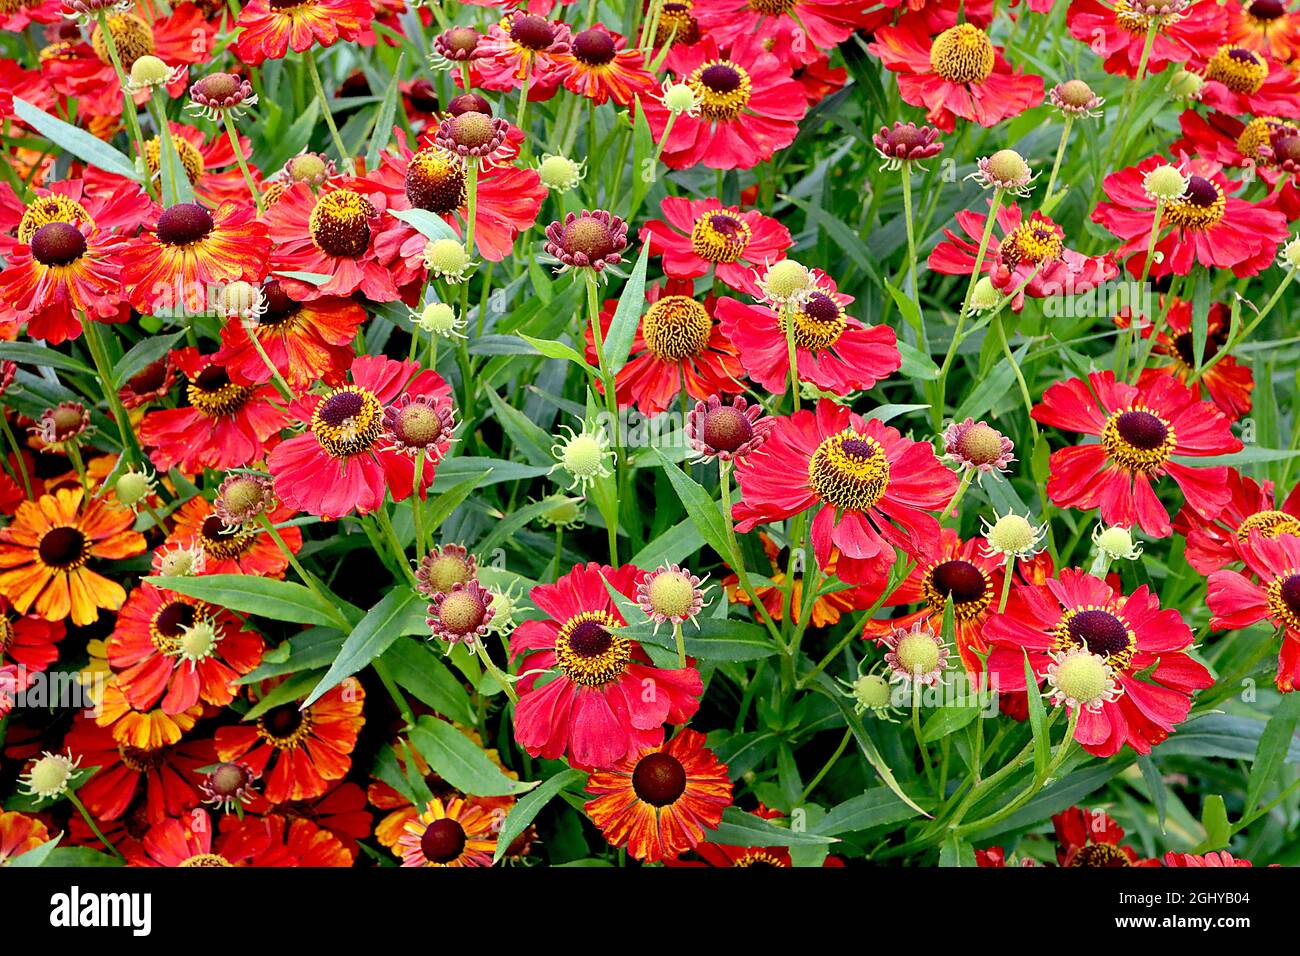 Helenium autumnale ‘Moerheim Beauty’ sneezeed Moerheim Beauty – fiori rossi con petali intagliati, agosto, Inghilterra, Regno Unito Foto Stock